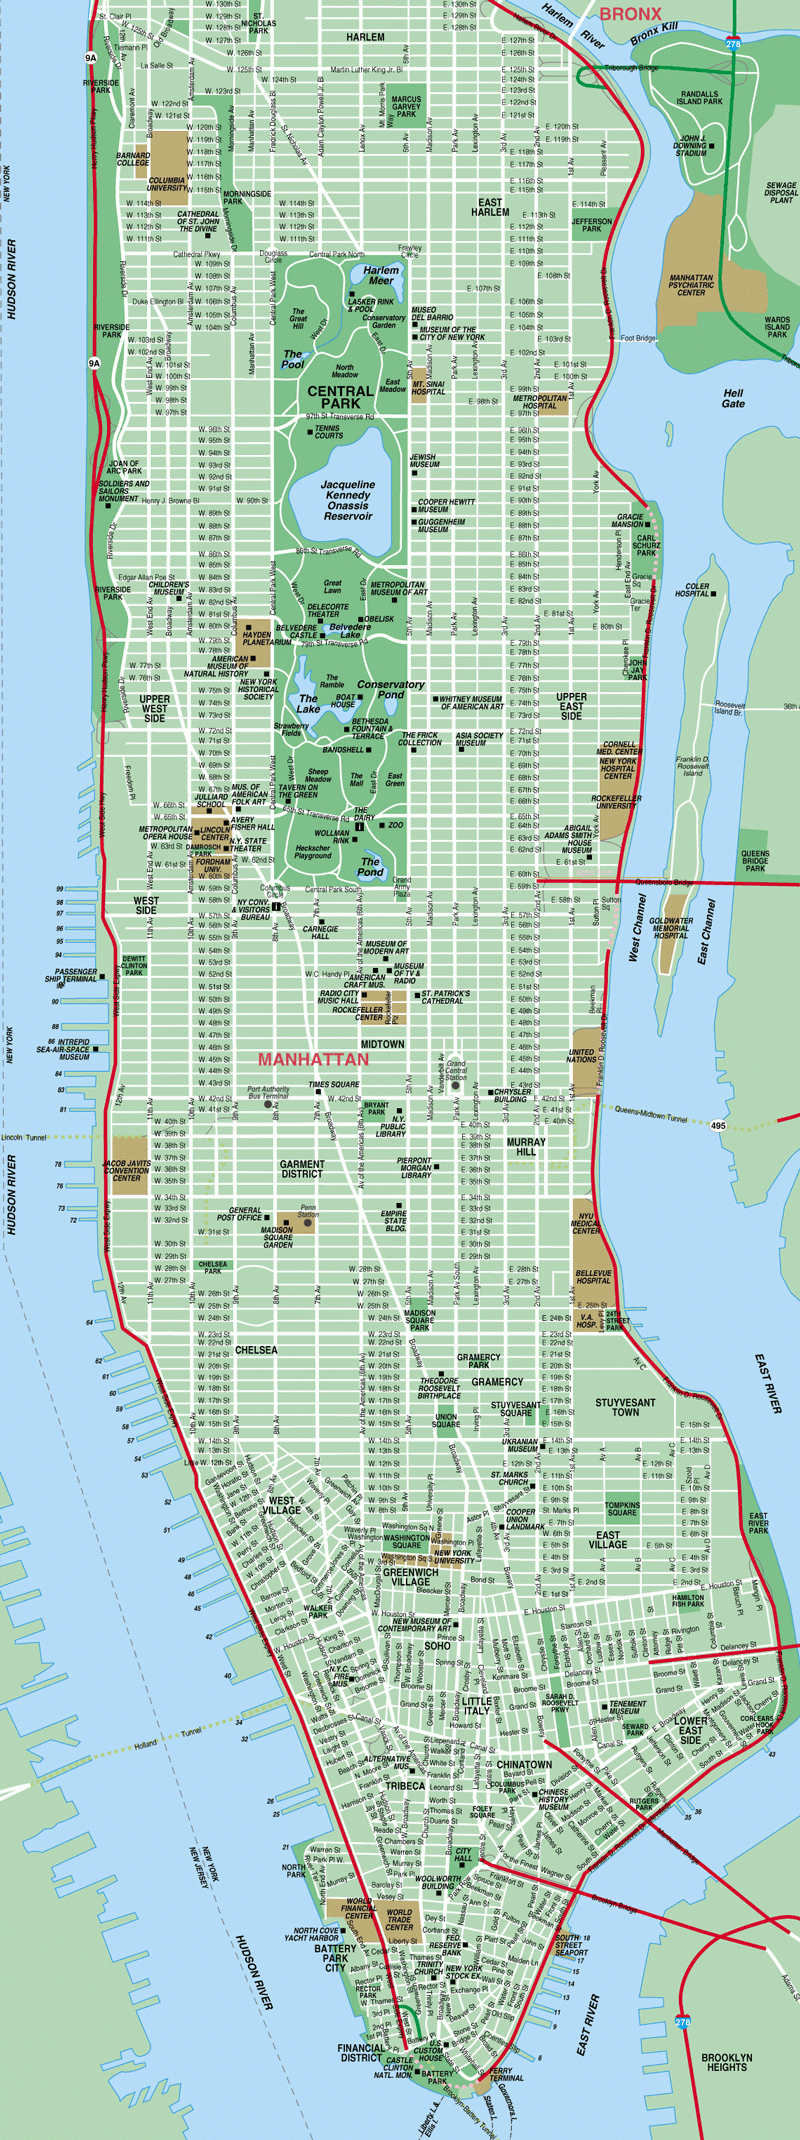 Printable Map Of Manhattan | The International House Is Just To The - Printable Map Of Manhattan